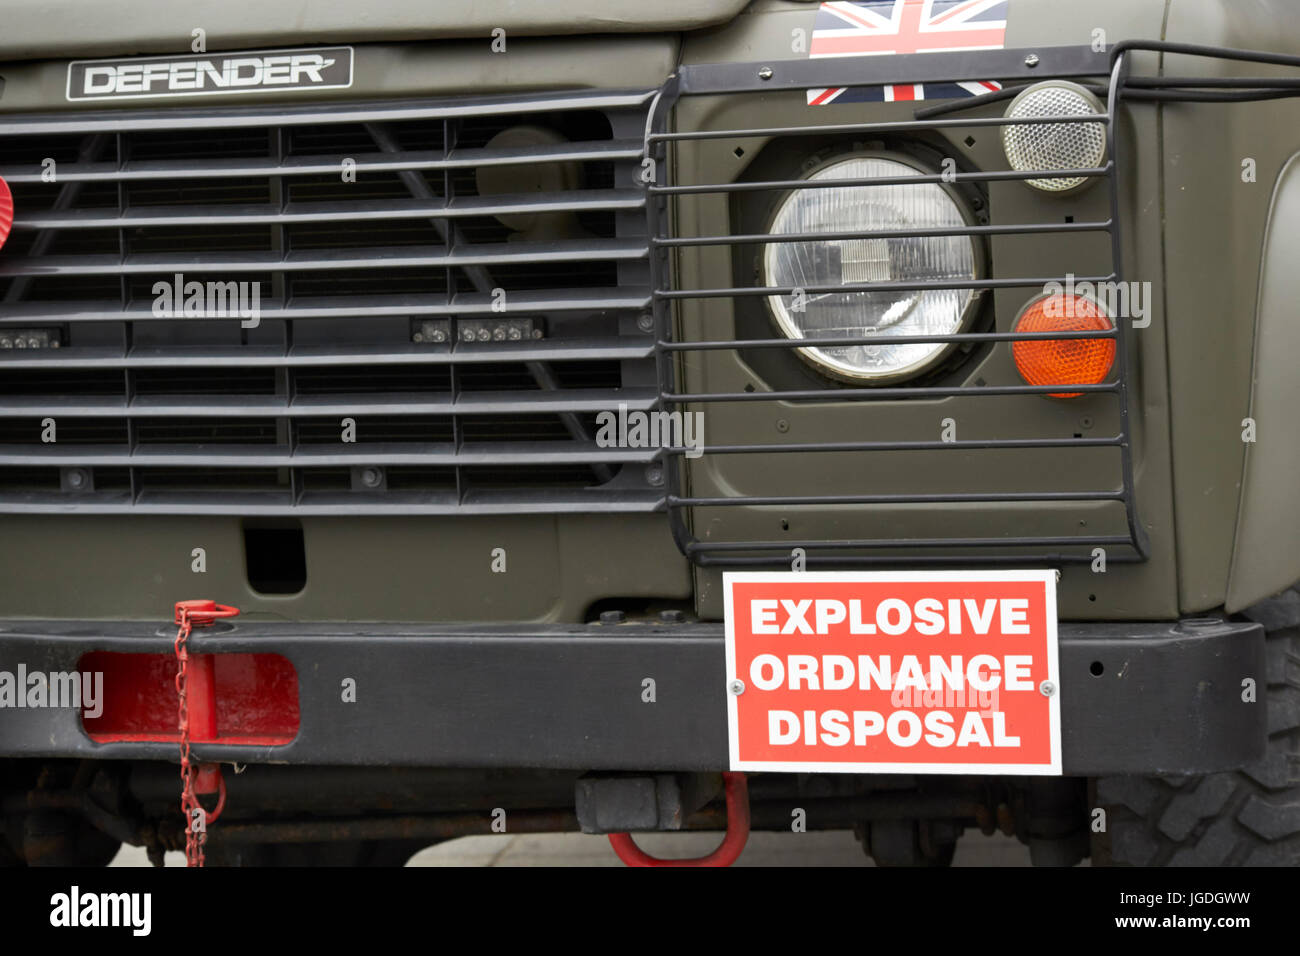 explosive ordnance disposal landrover british army uk Stock Photo